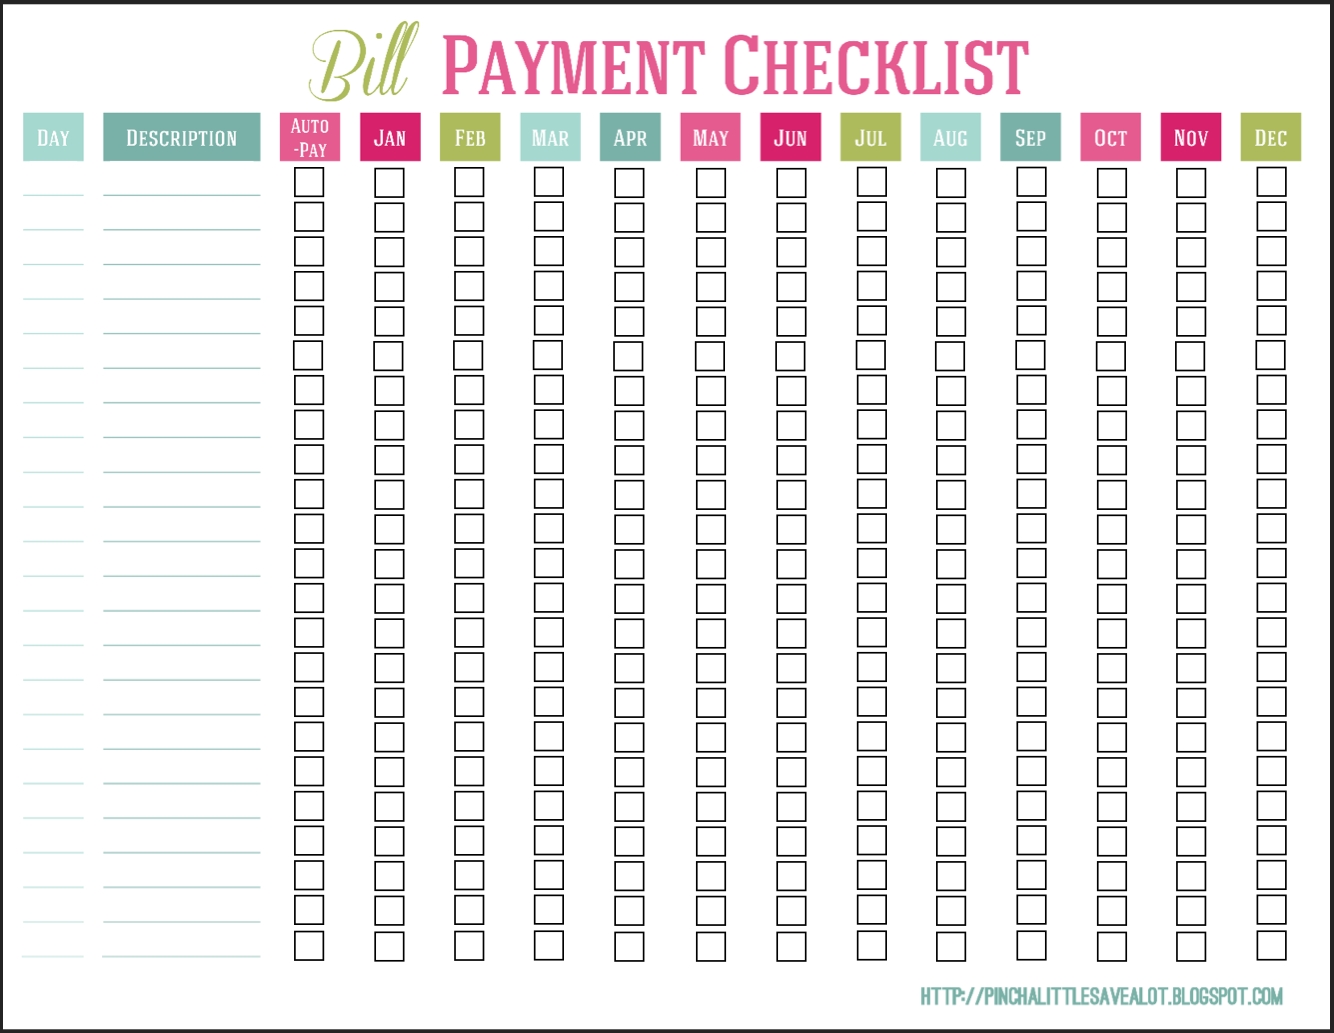 Bill Payment Checklist | Bill Payment Checklist, Bill  Bill Pay Printable Checklist Templates